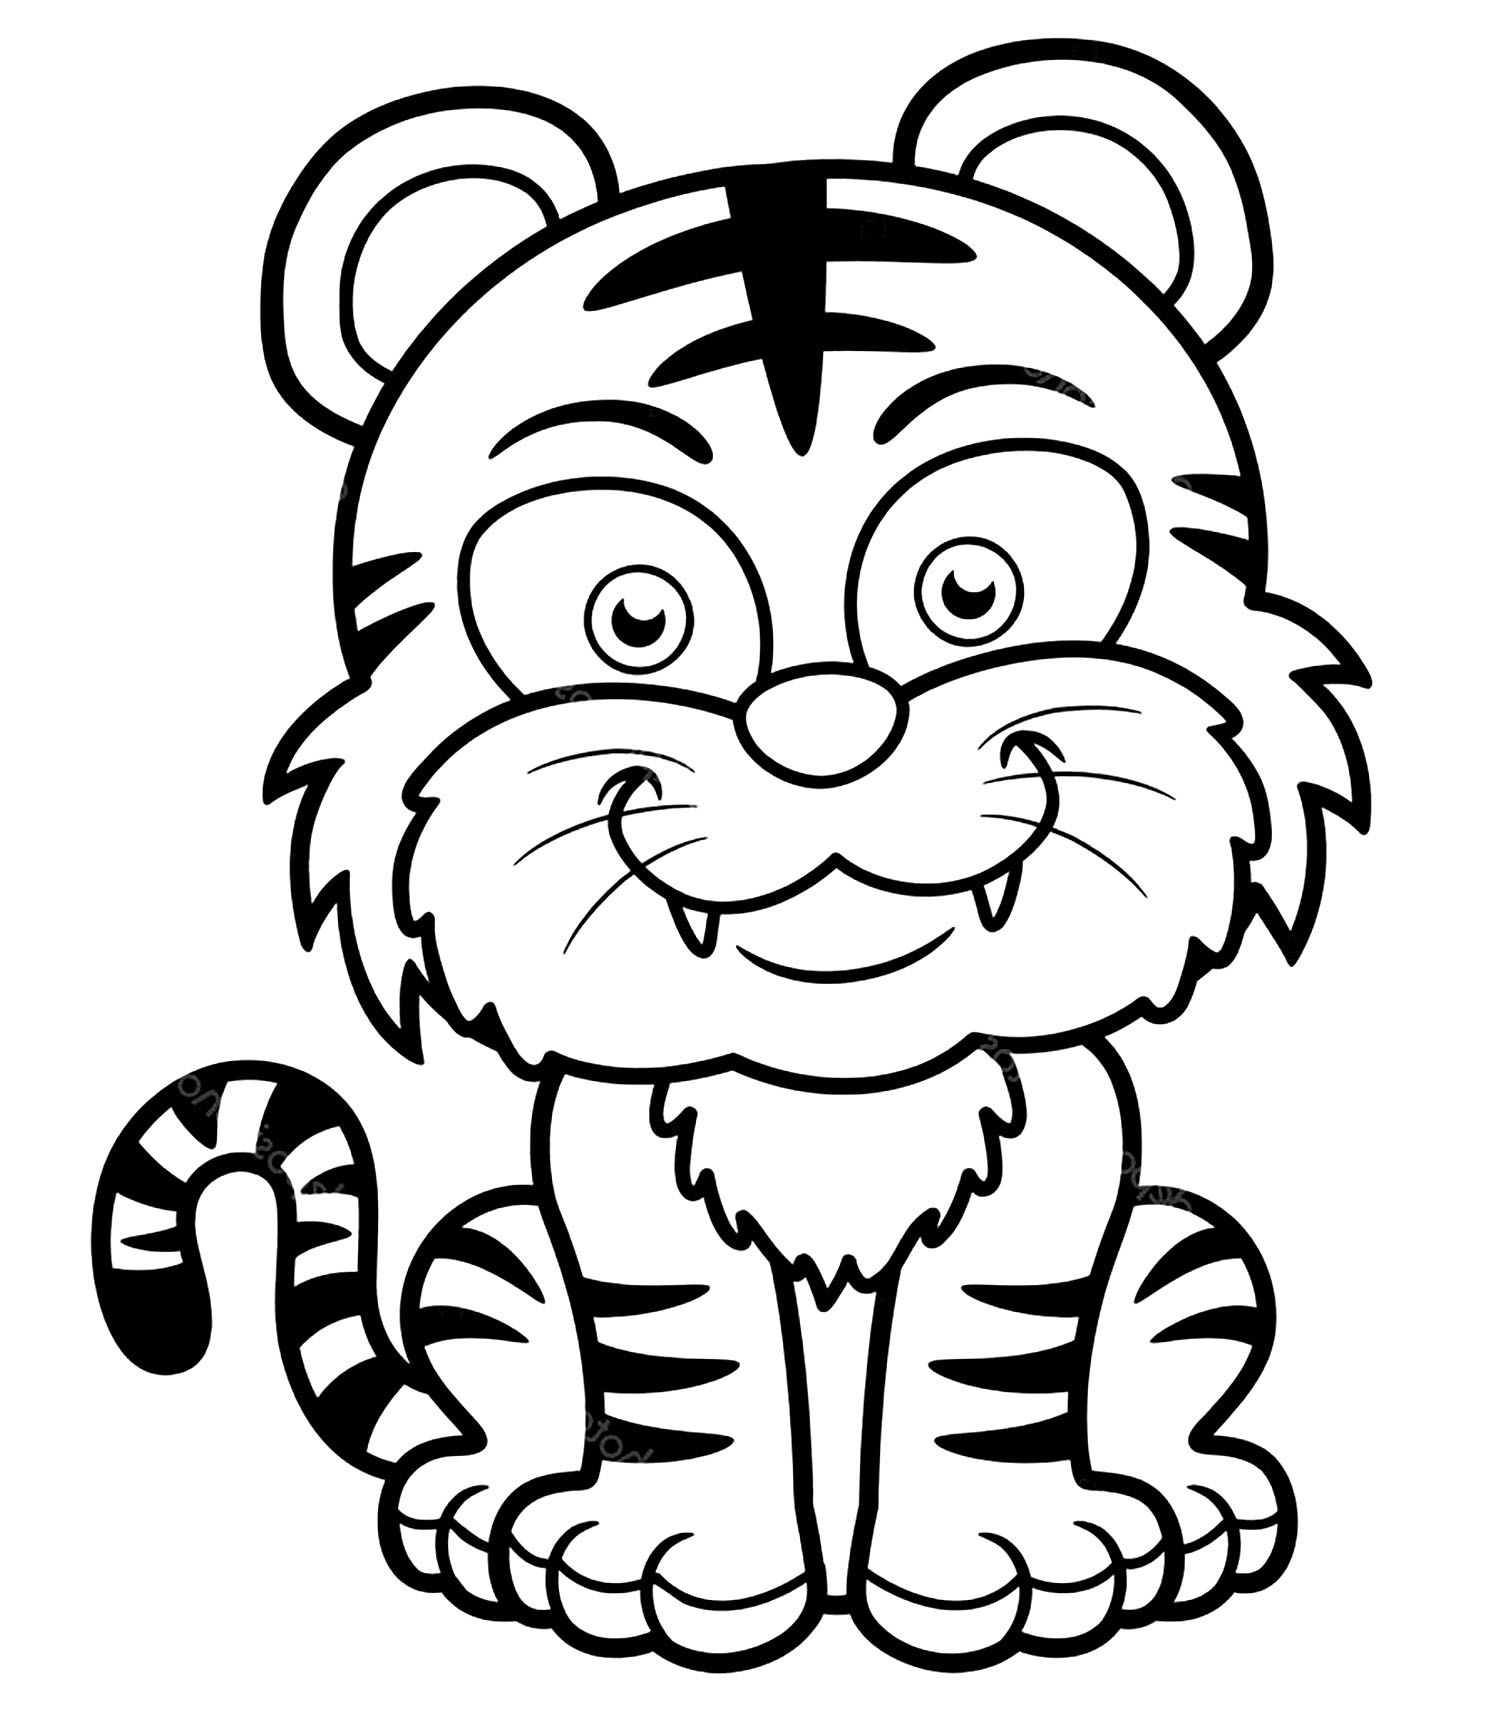 Dibujos para colorear de tigres para niãos